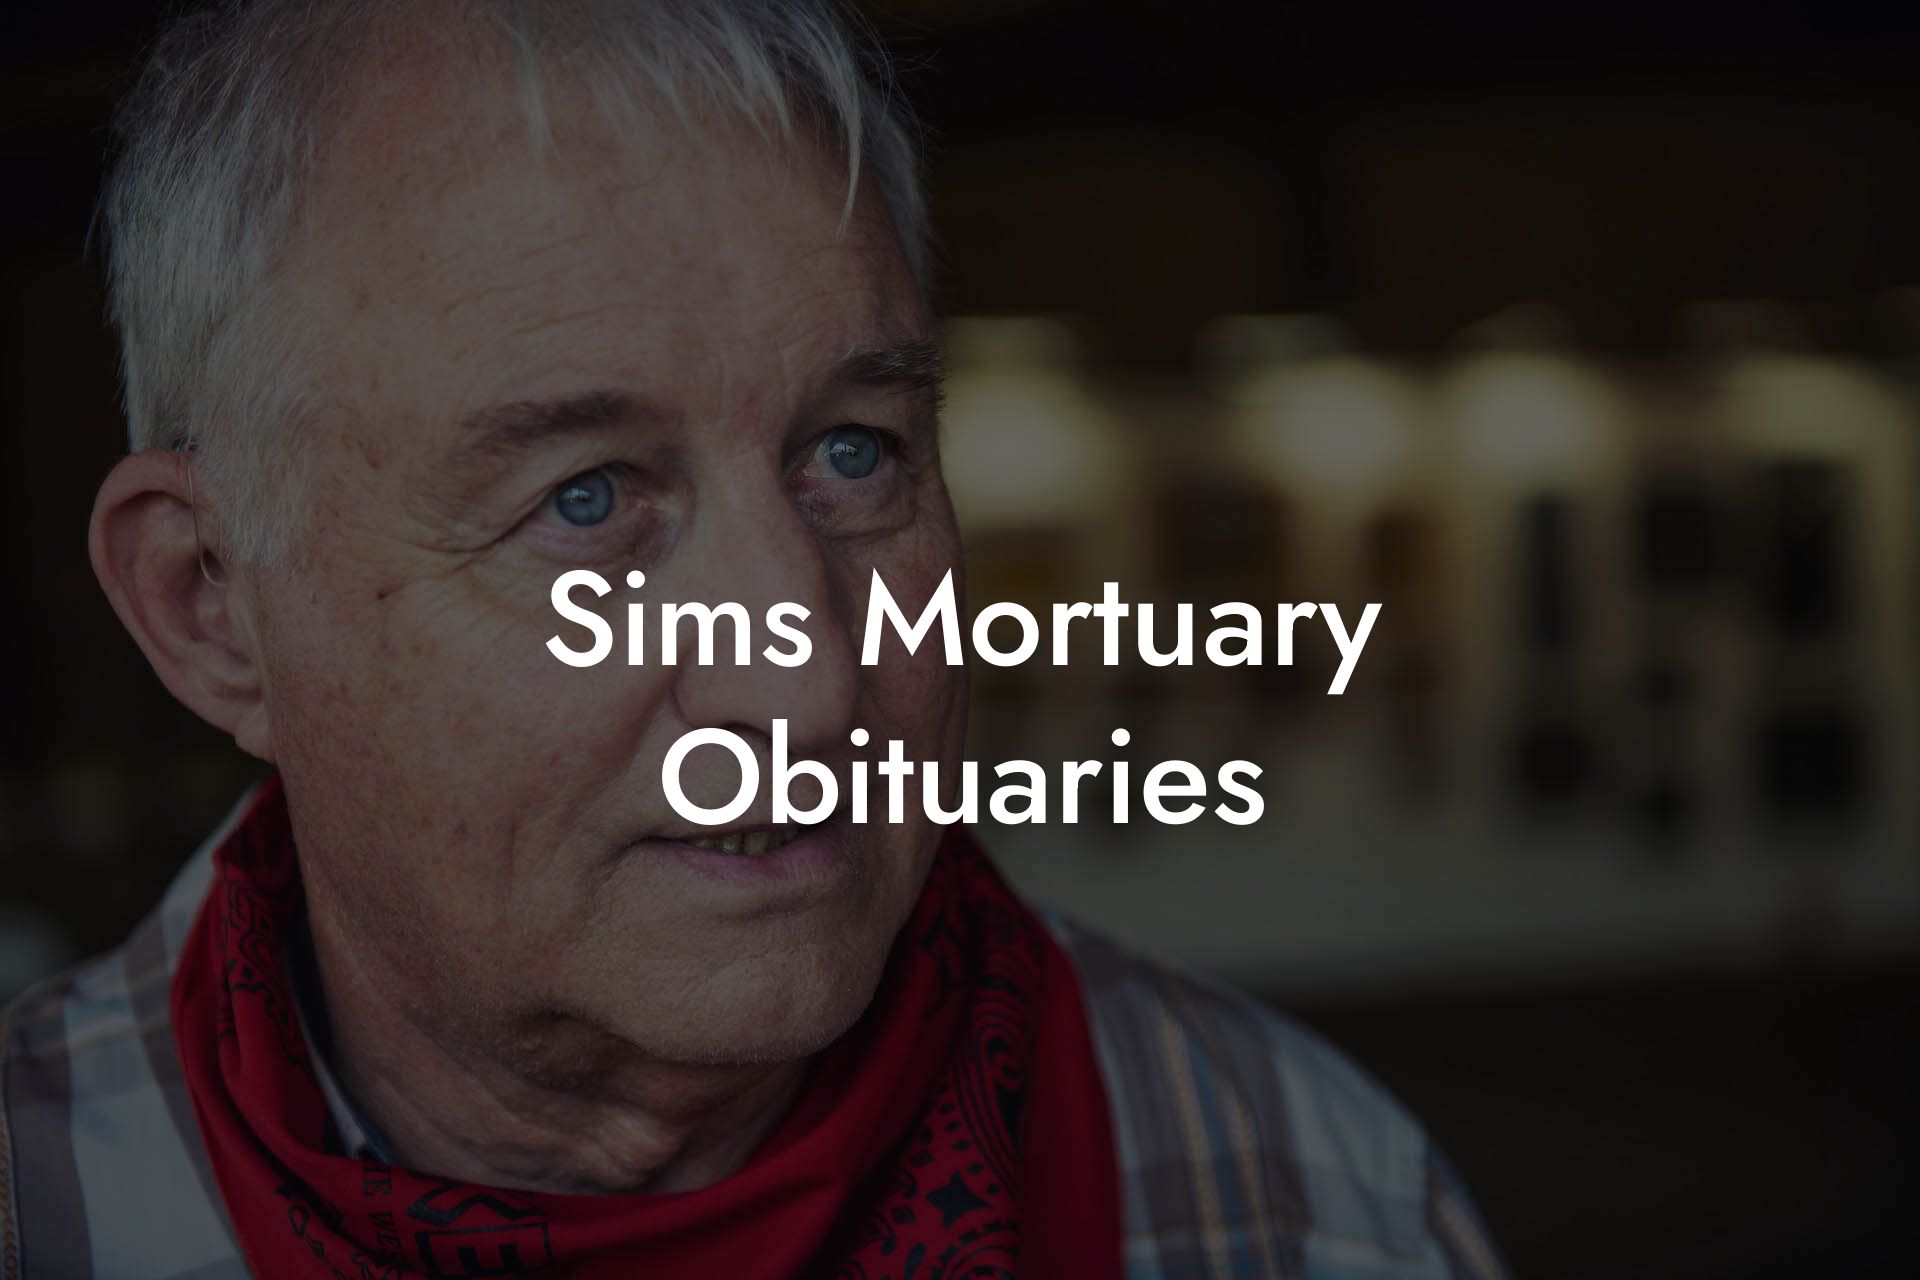 Sims Mortuary Obituaries